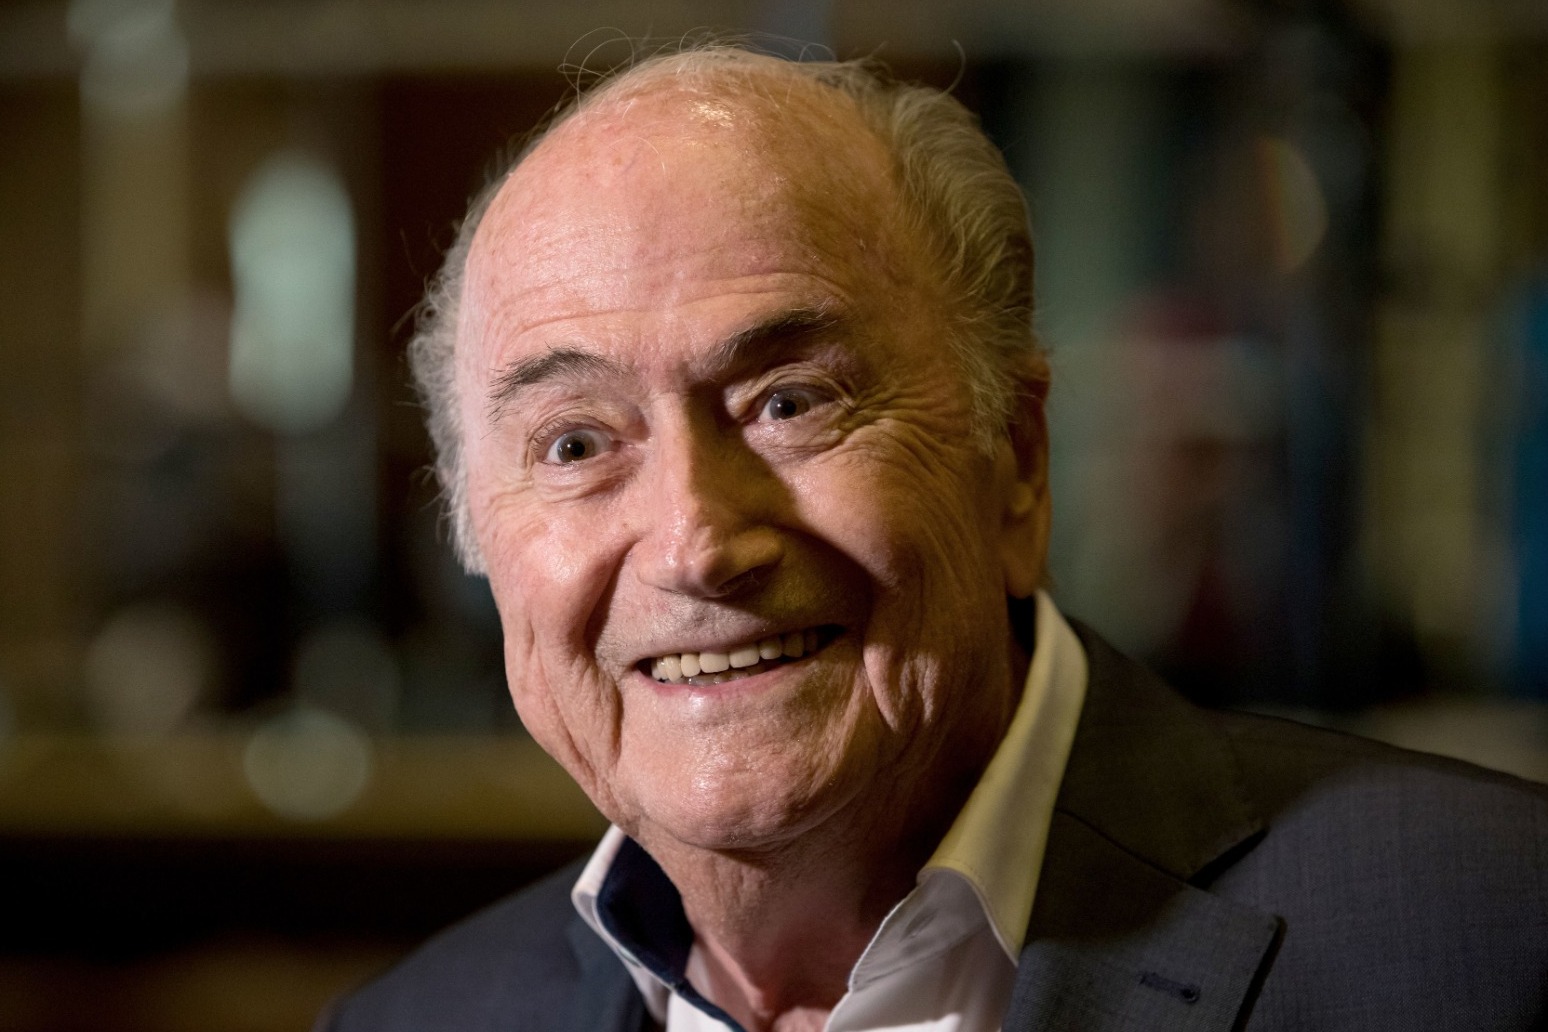 Former FIFA boss Sepp Blatter gives a clear no to biennial World Cups proposal